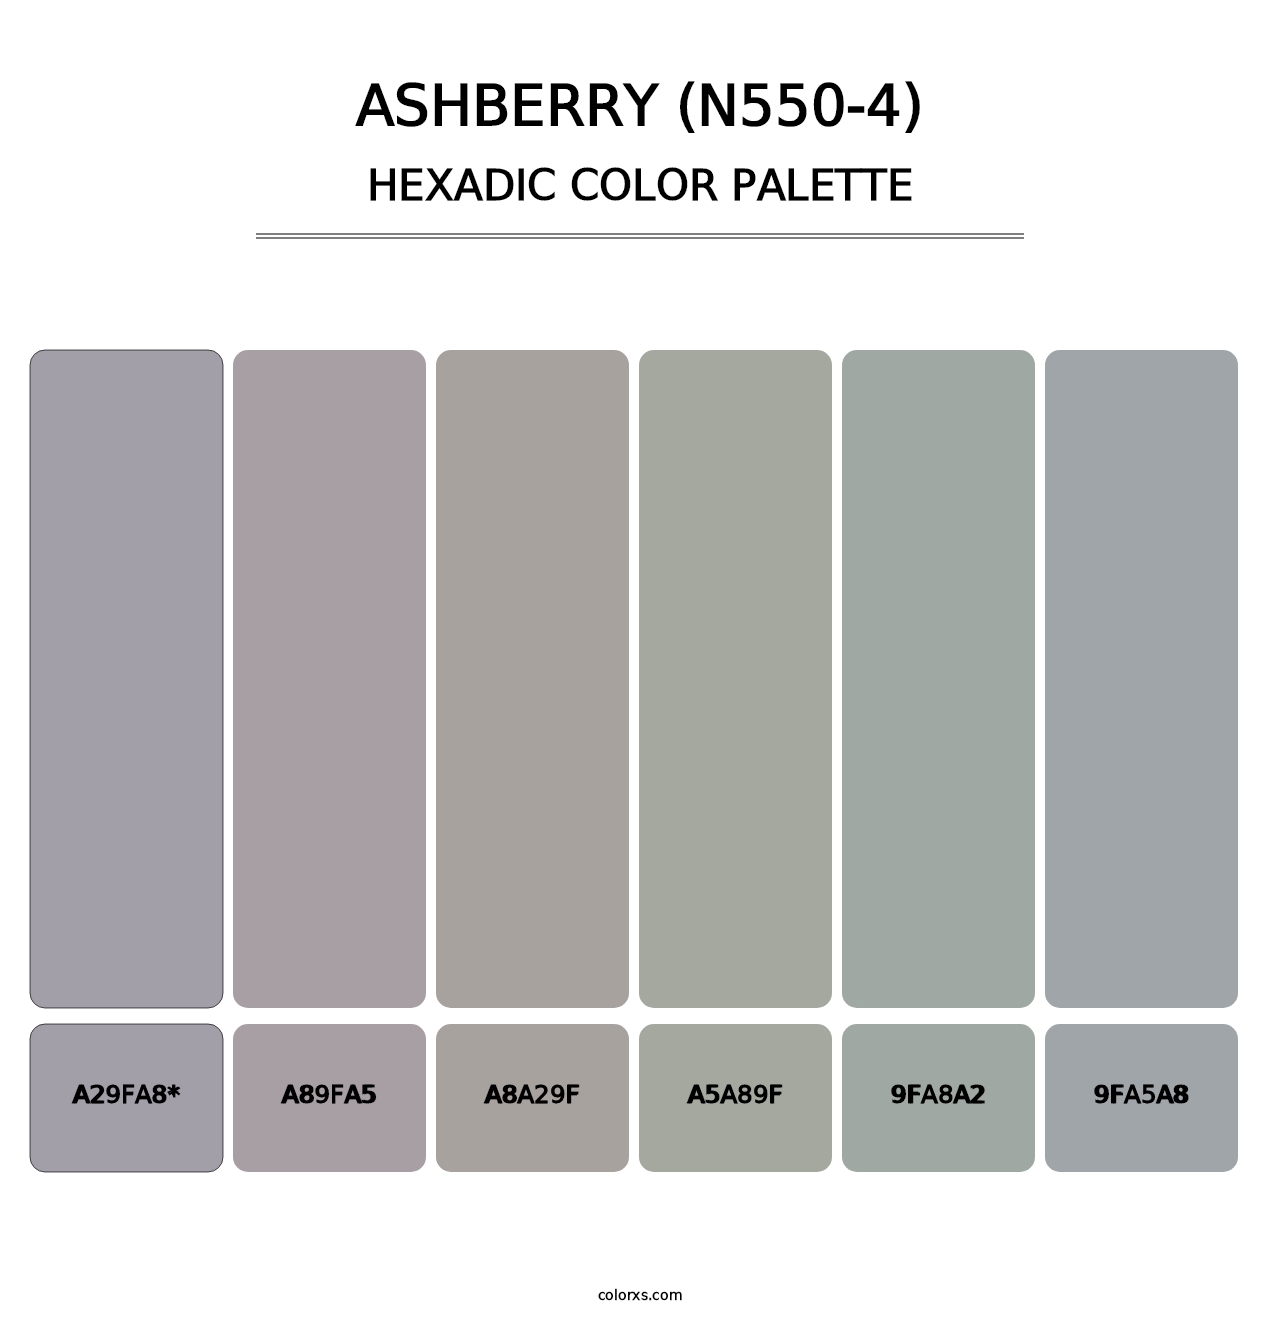 Ashberry (N550-4) - Hexadic Color Palette